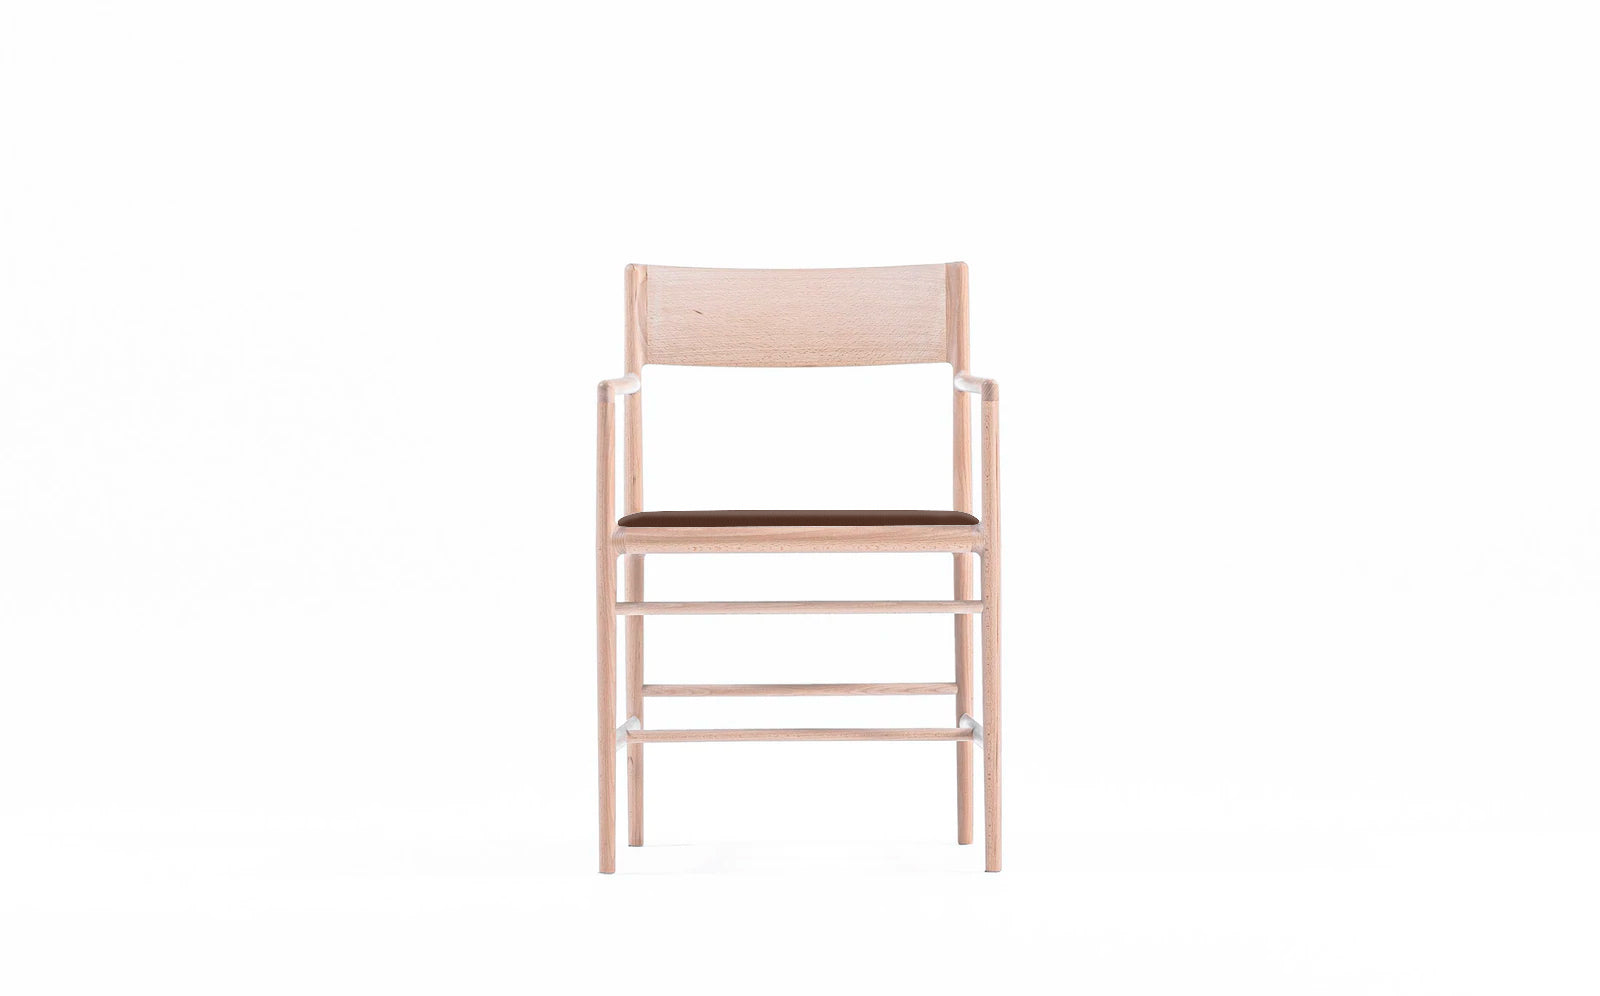 A chair on the vertical axis - armchair